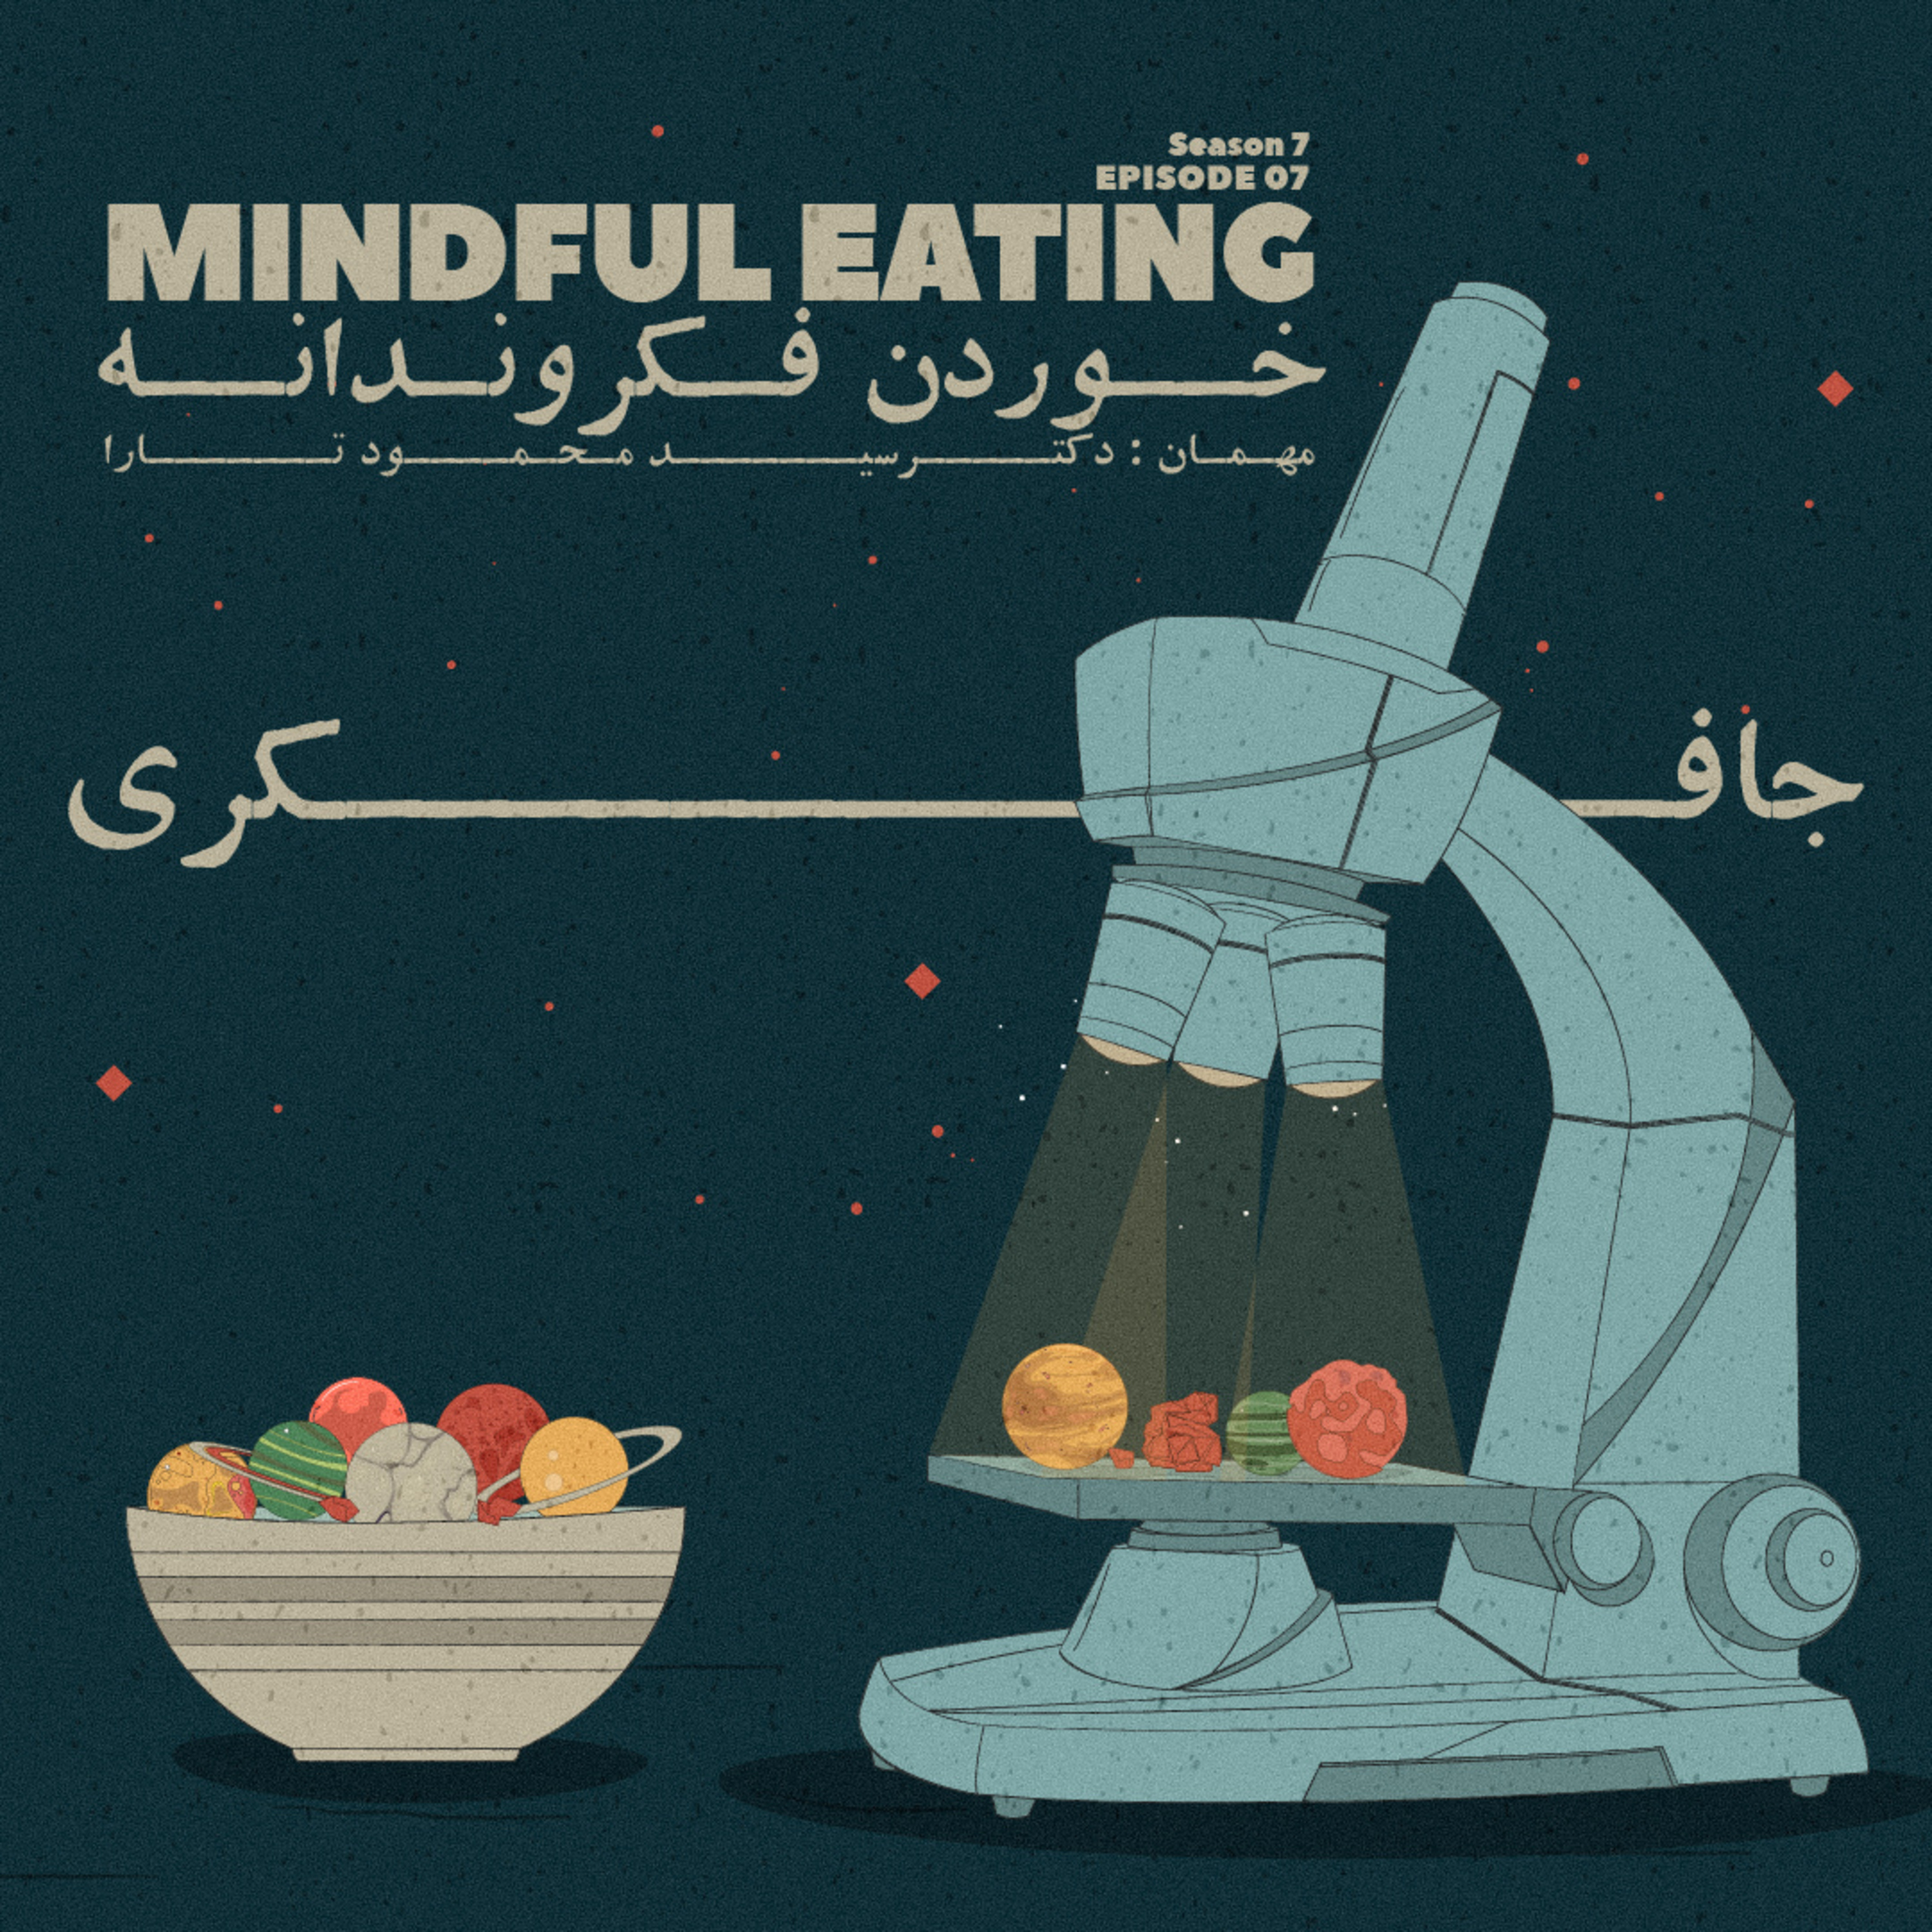 Episode 07 - Mindful eating (خوردن فکروندانه)